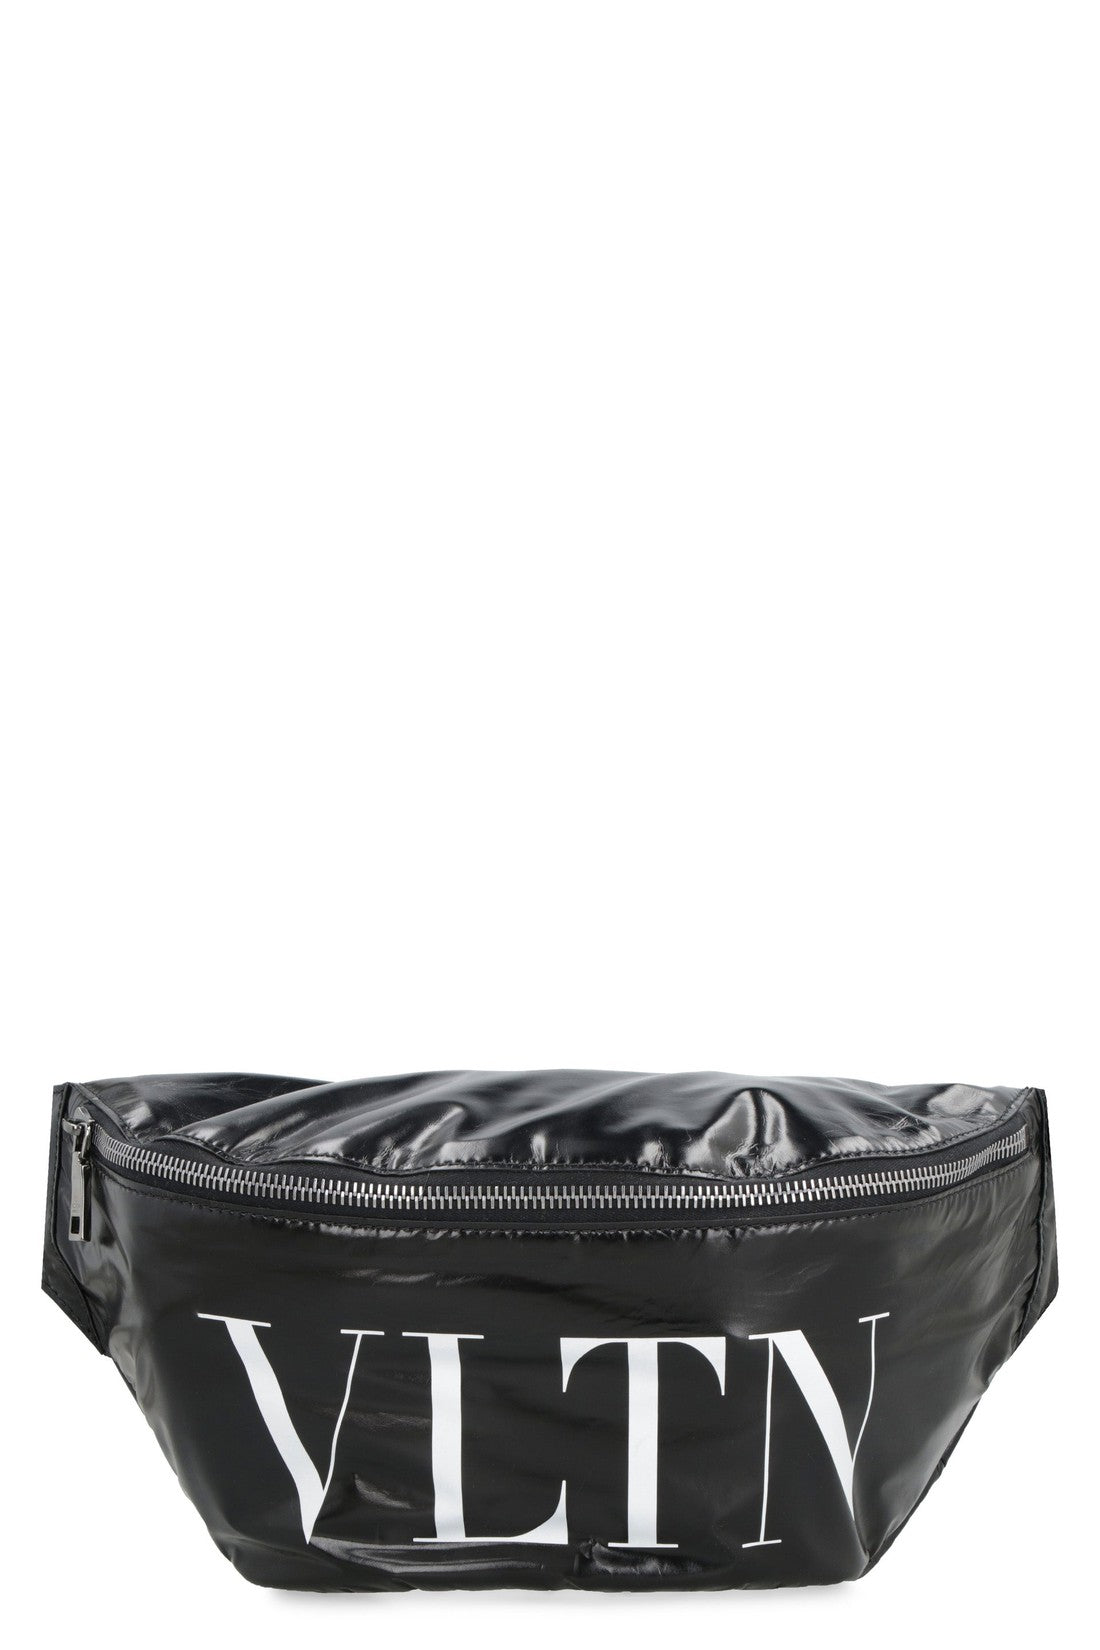 Valentino-OUTLET-SALE-Valentino Garavani - VLTN SOFT leather belt bag-ARCHIVIST